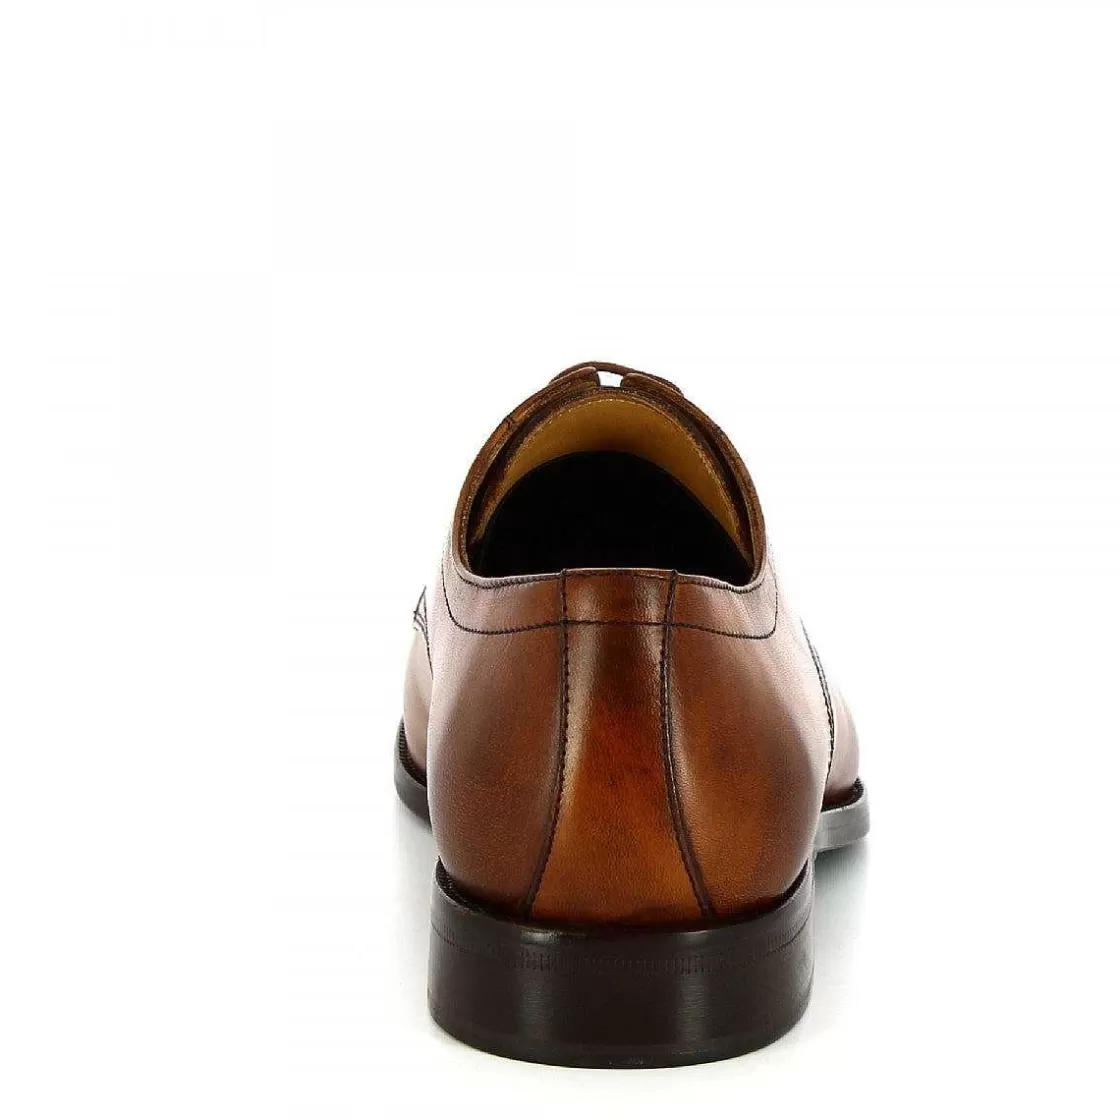 Leonardo Handmade Men'S Oxford Shoes In Tan Calf Leather Discount